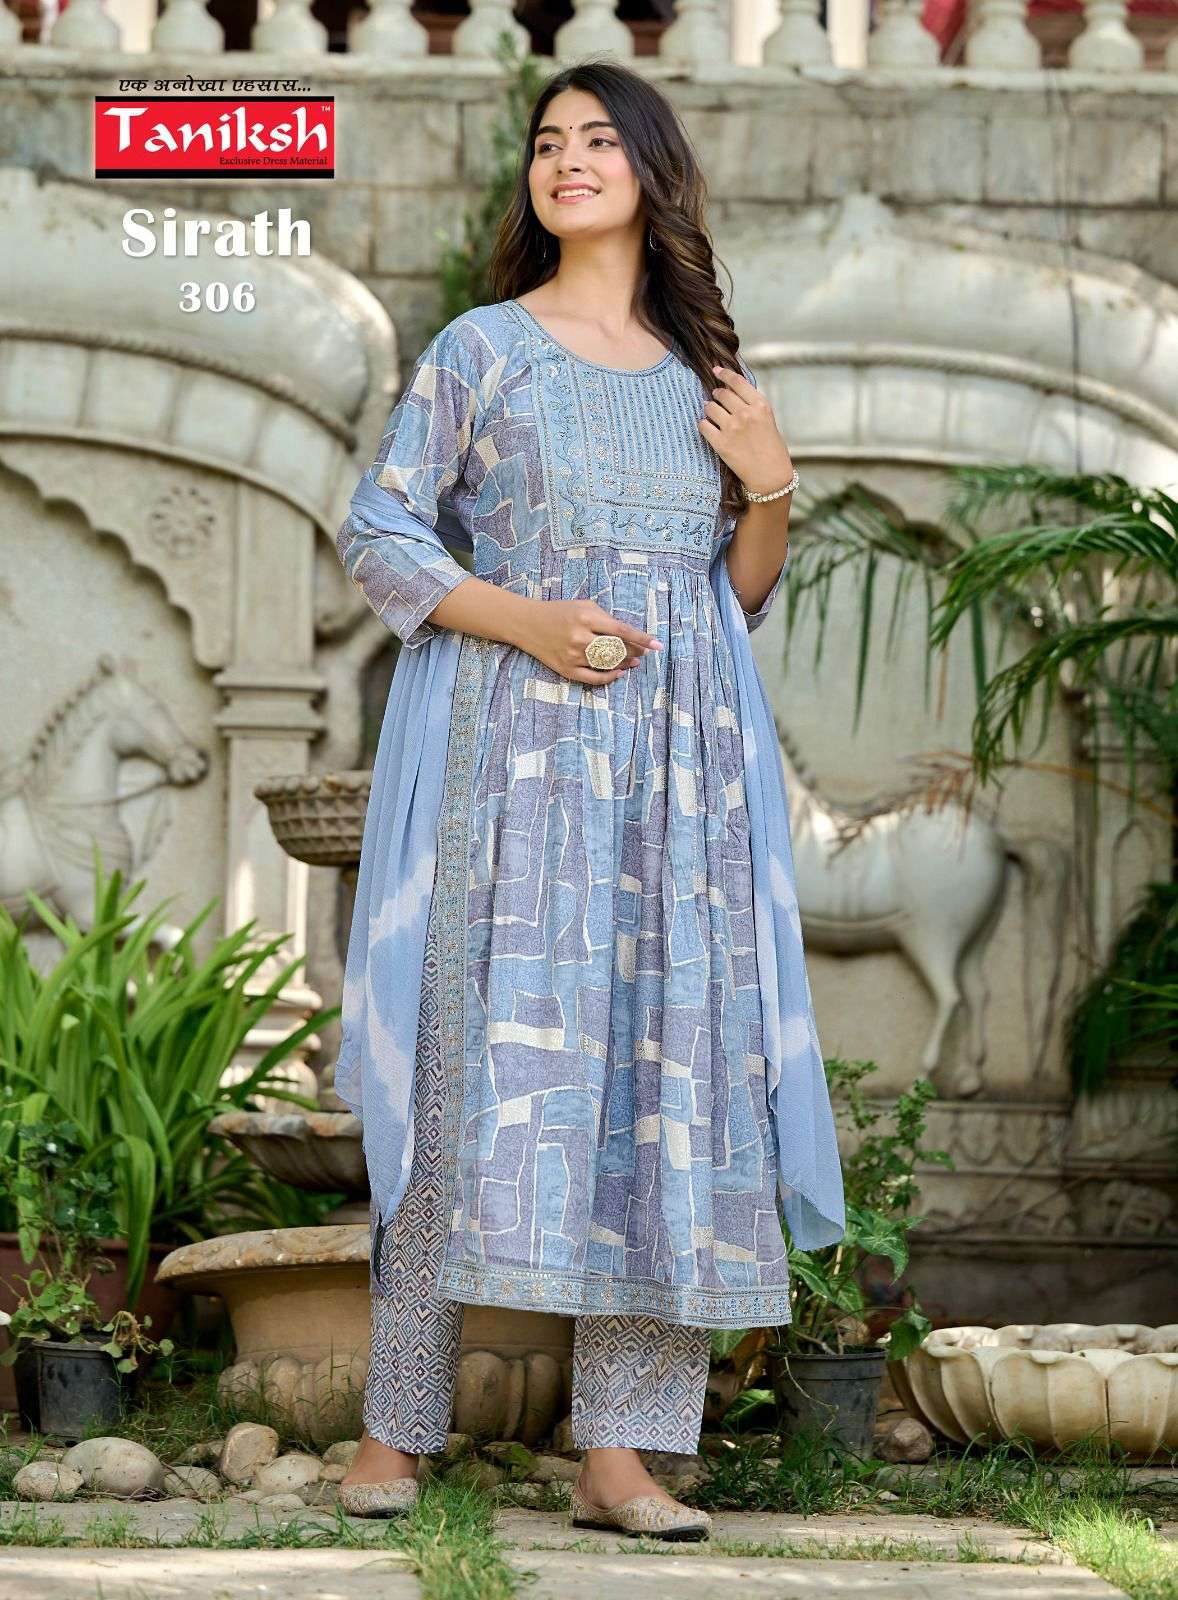 taniksh sirath vol-3 301-308 series readymade designer dress catalogue online price surat